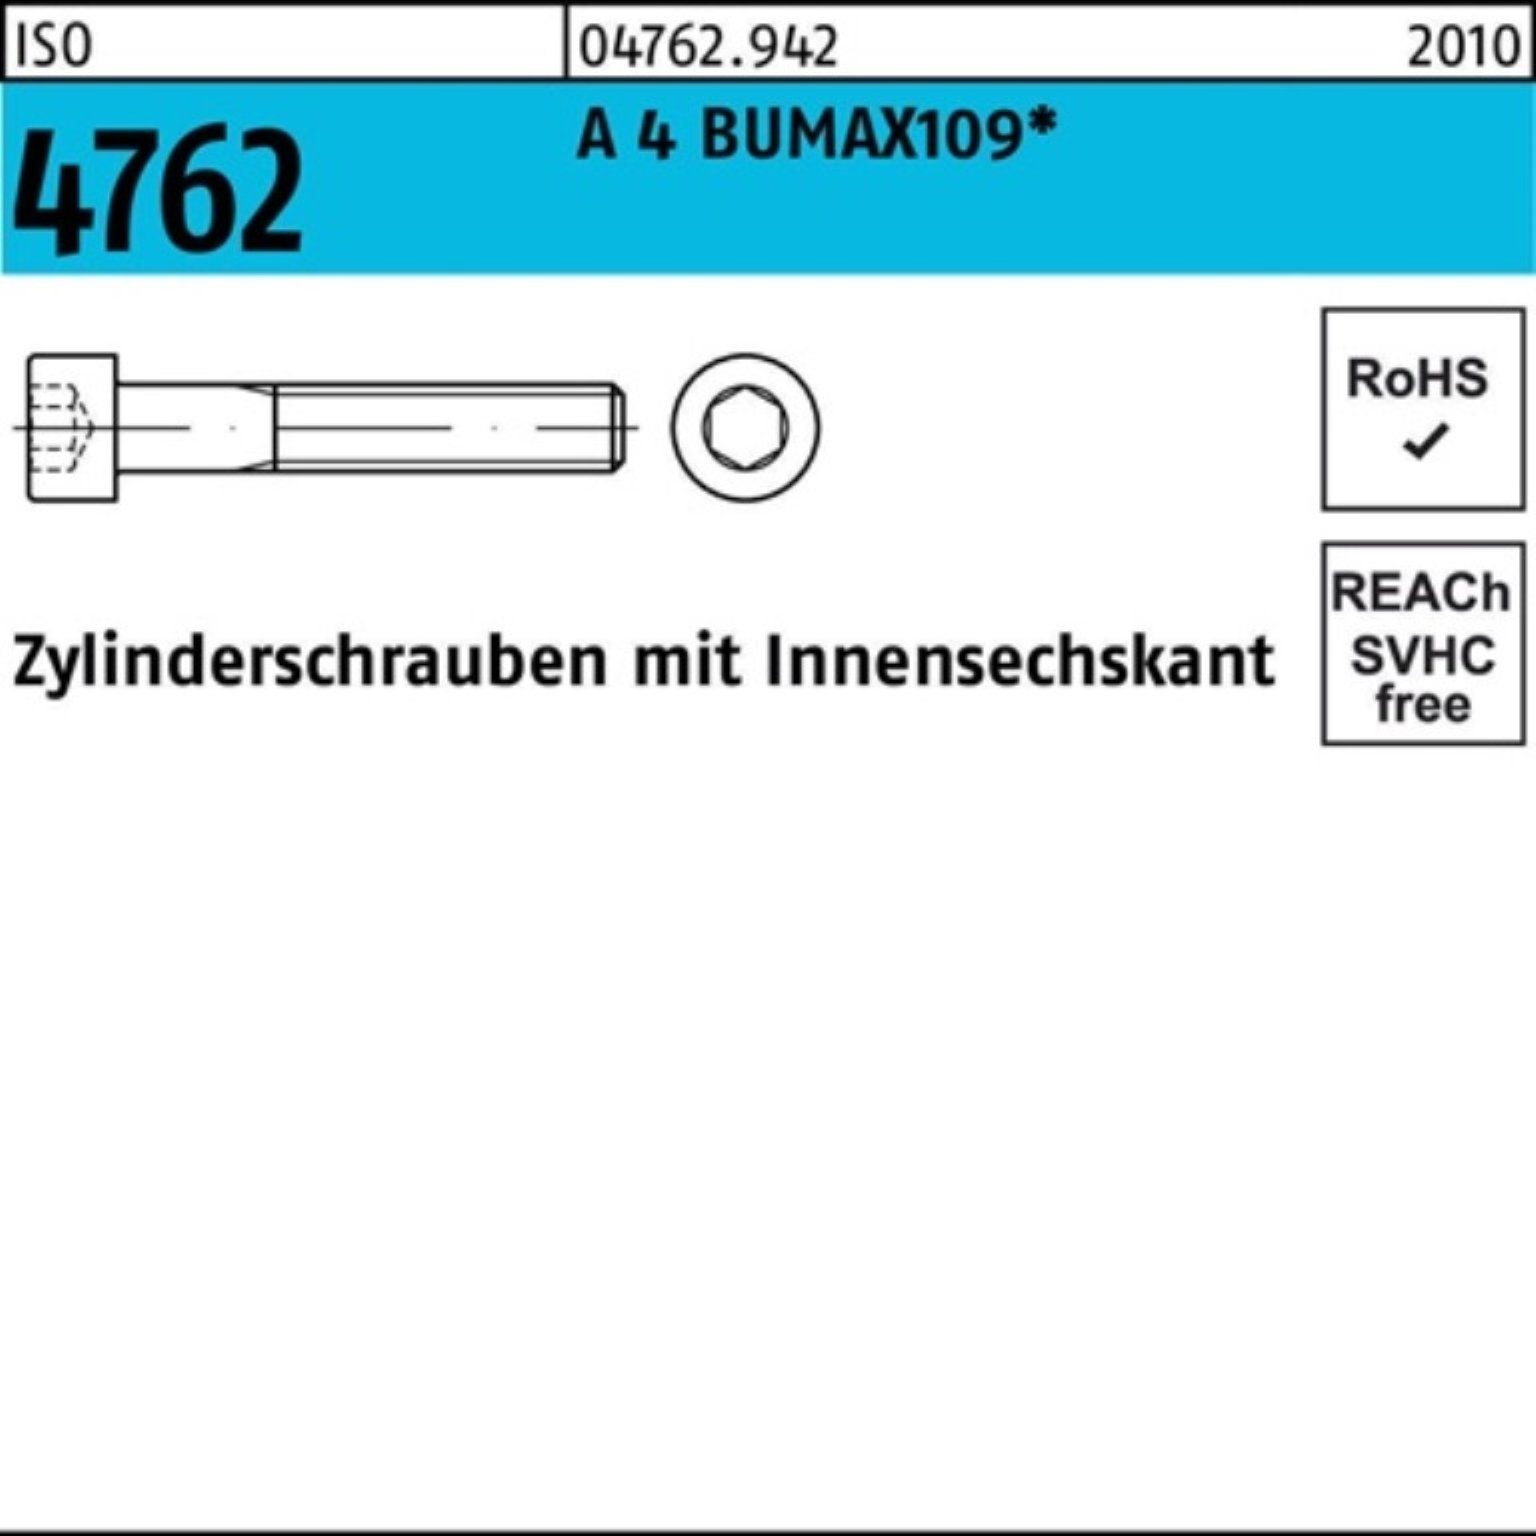 Bufab Zylinderschraube 100er Pack Zylinderschraube ISO 4762 Innen-6kt M8x 20 A 4 BUMAX109 50